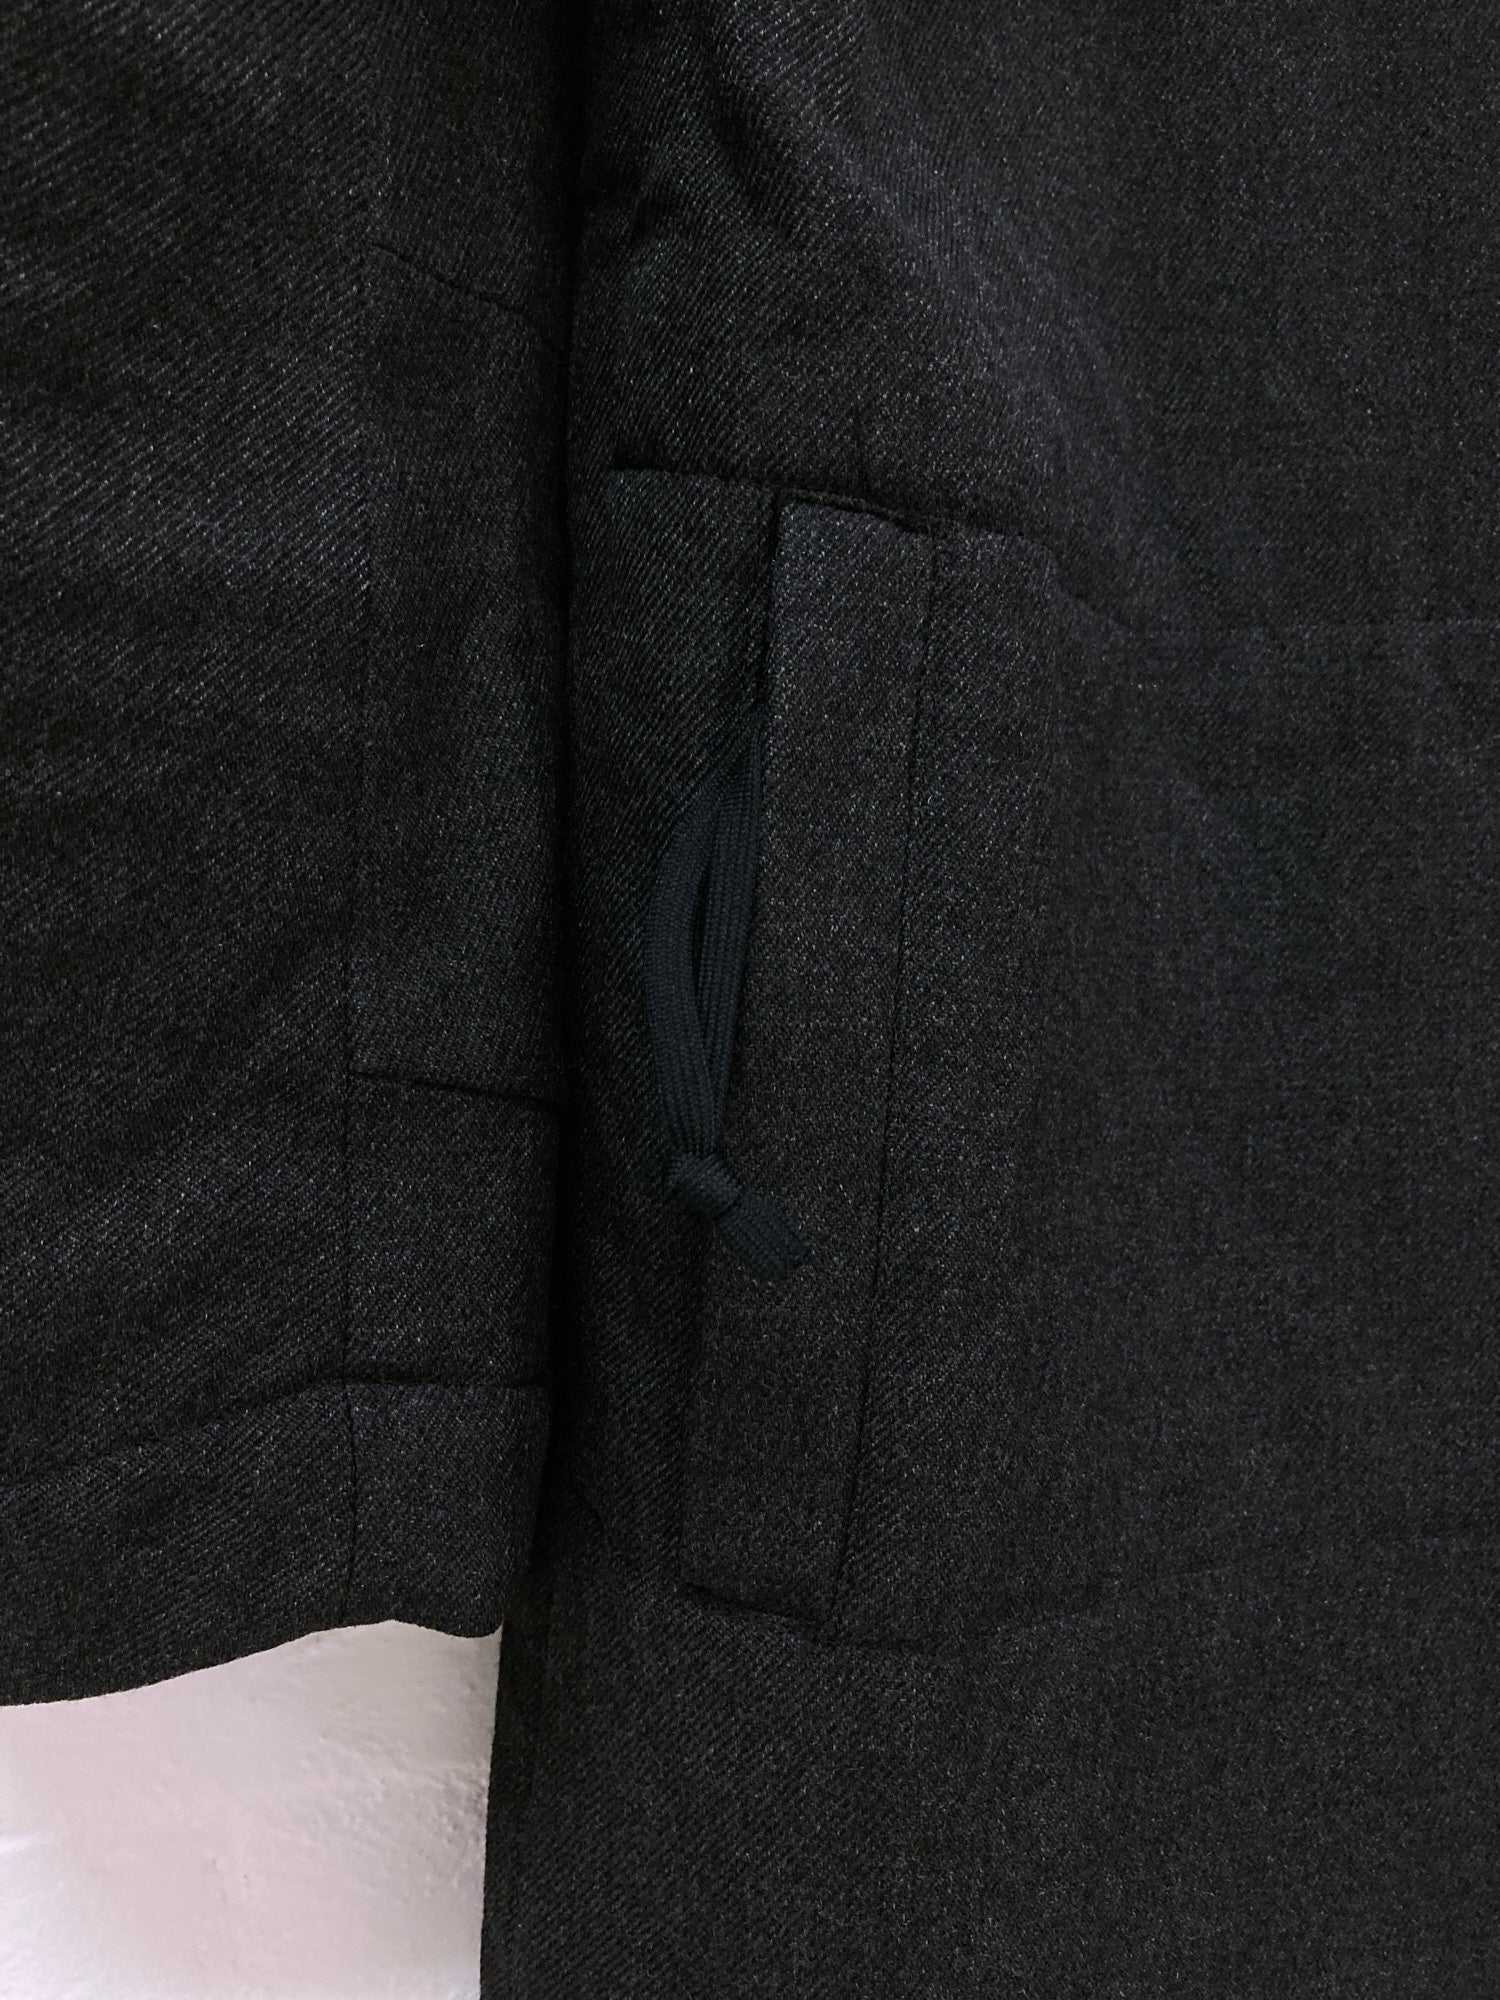 Ryuichiro Shimazaki Homme dark grey wool multi (eight) pocket hooded coat - M